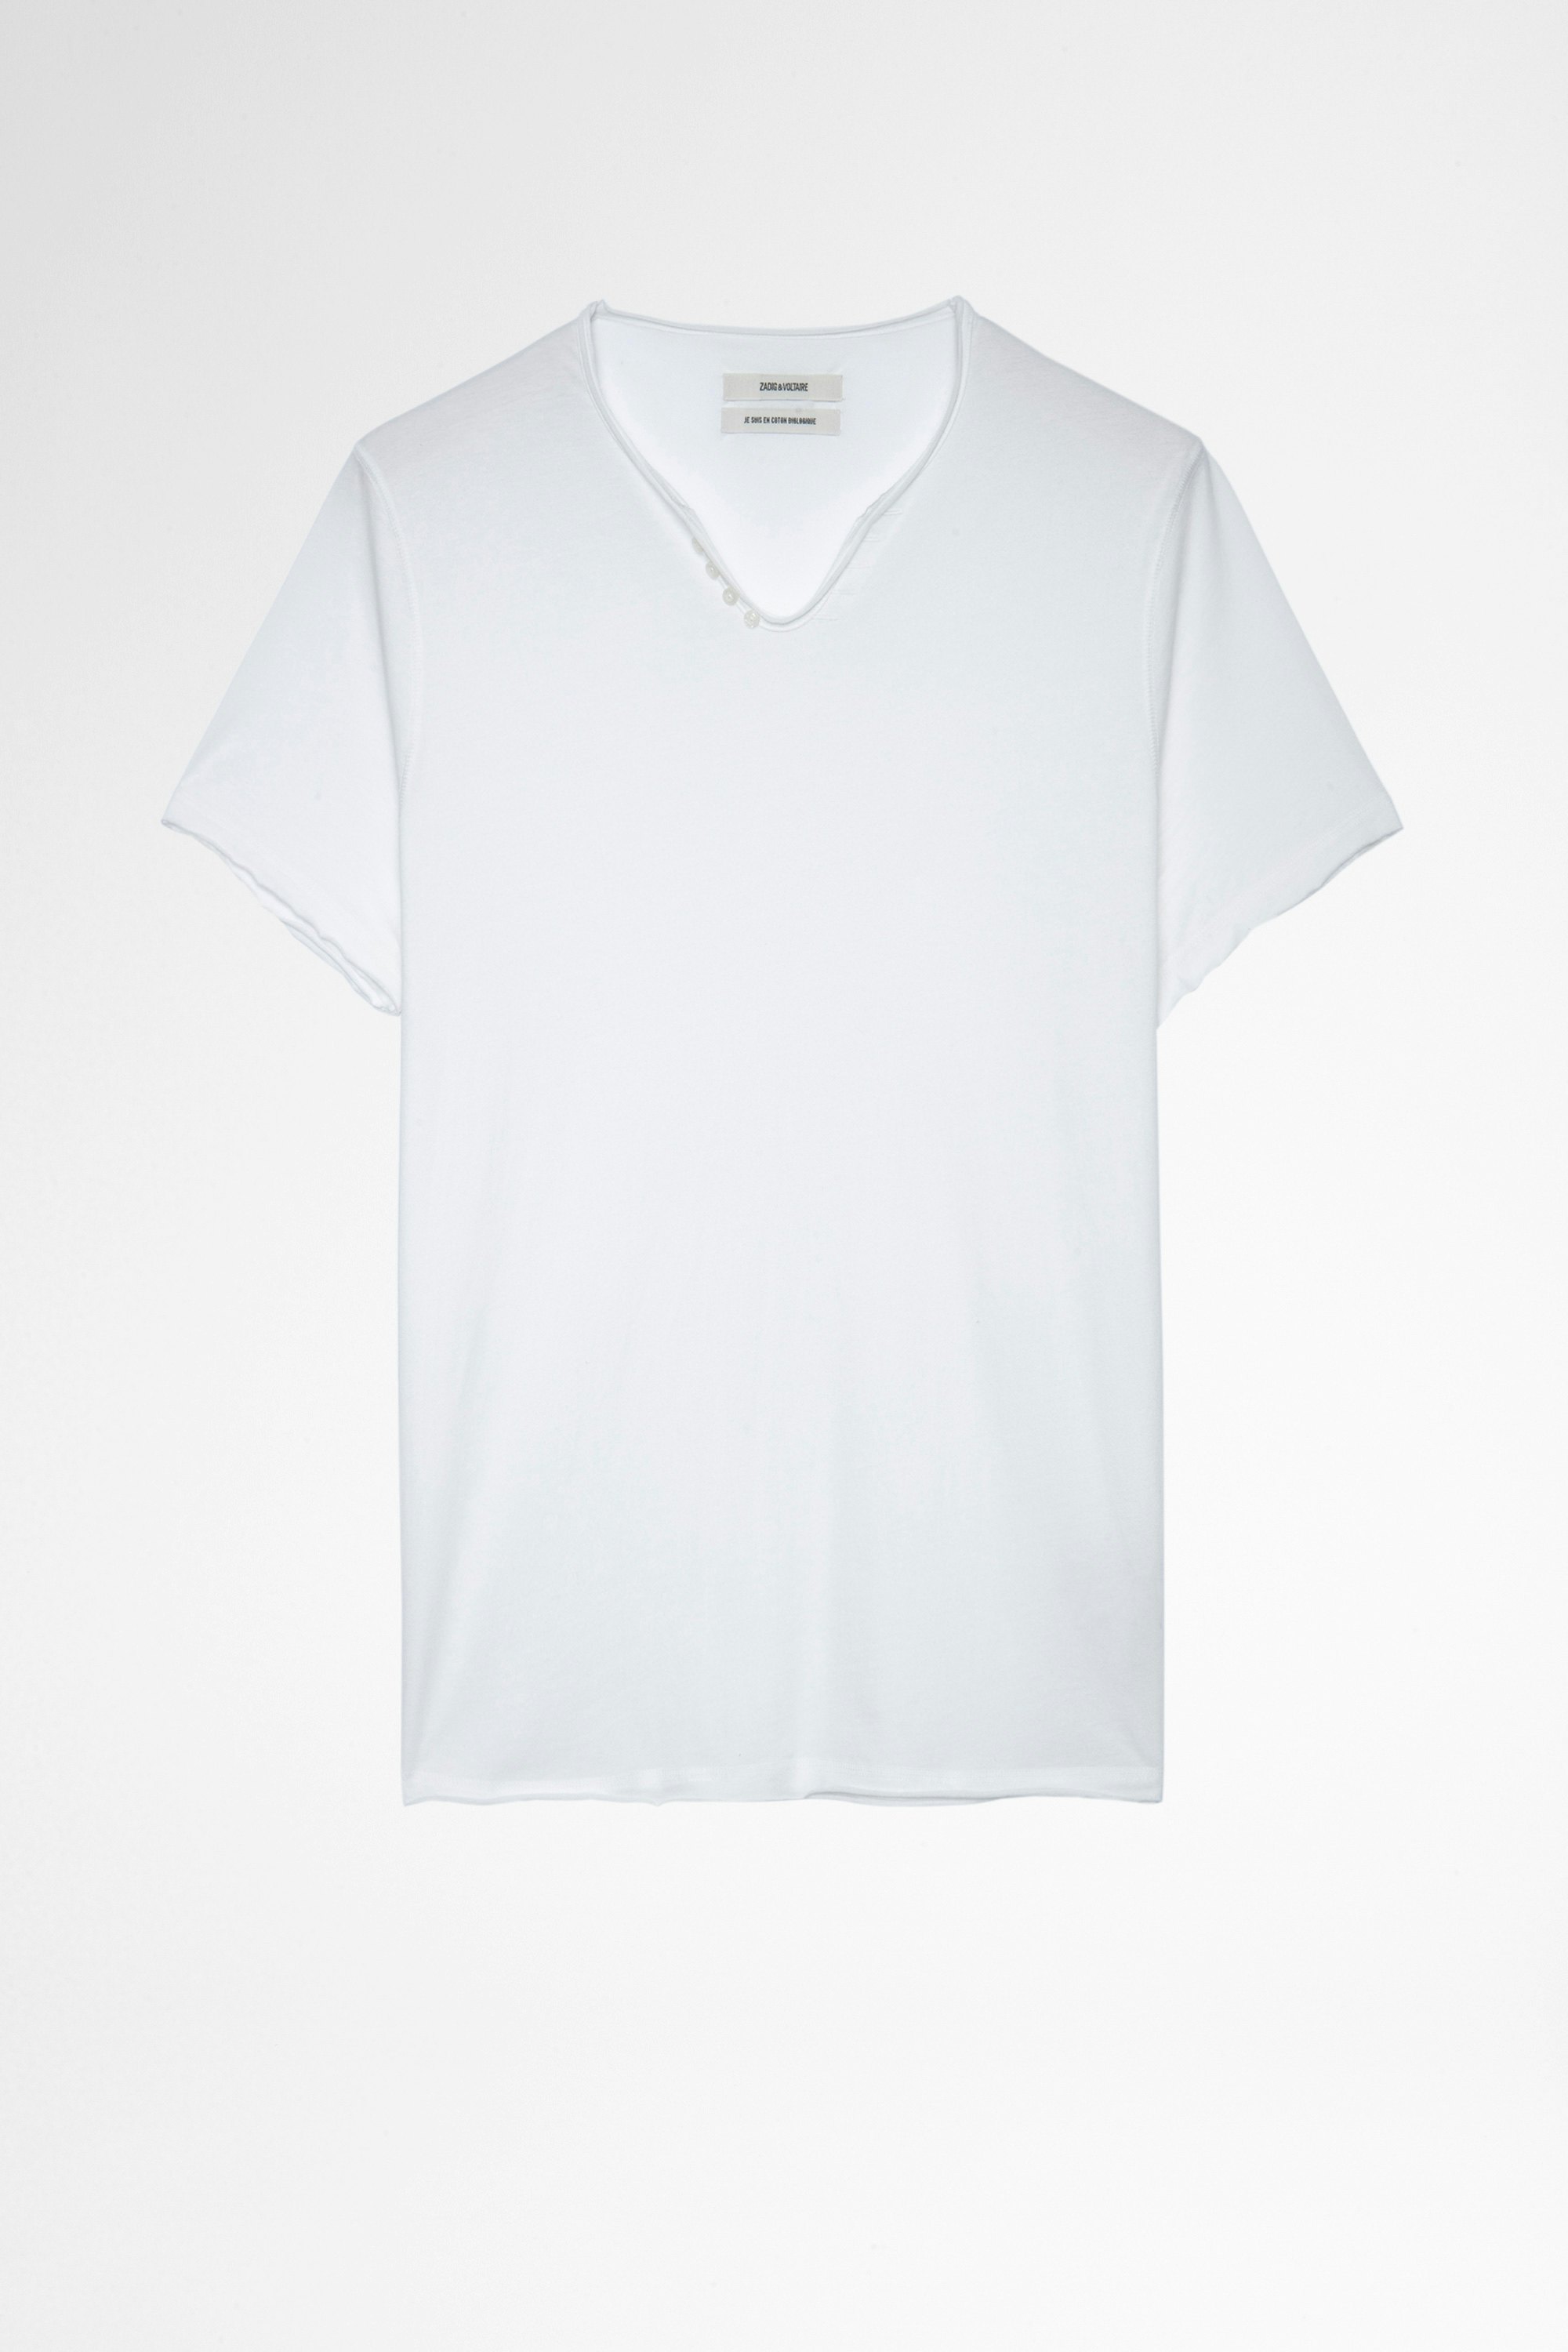 T-shirt Monastir Weißes Herren-T-Shirt